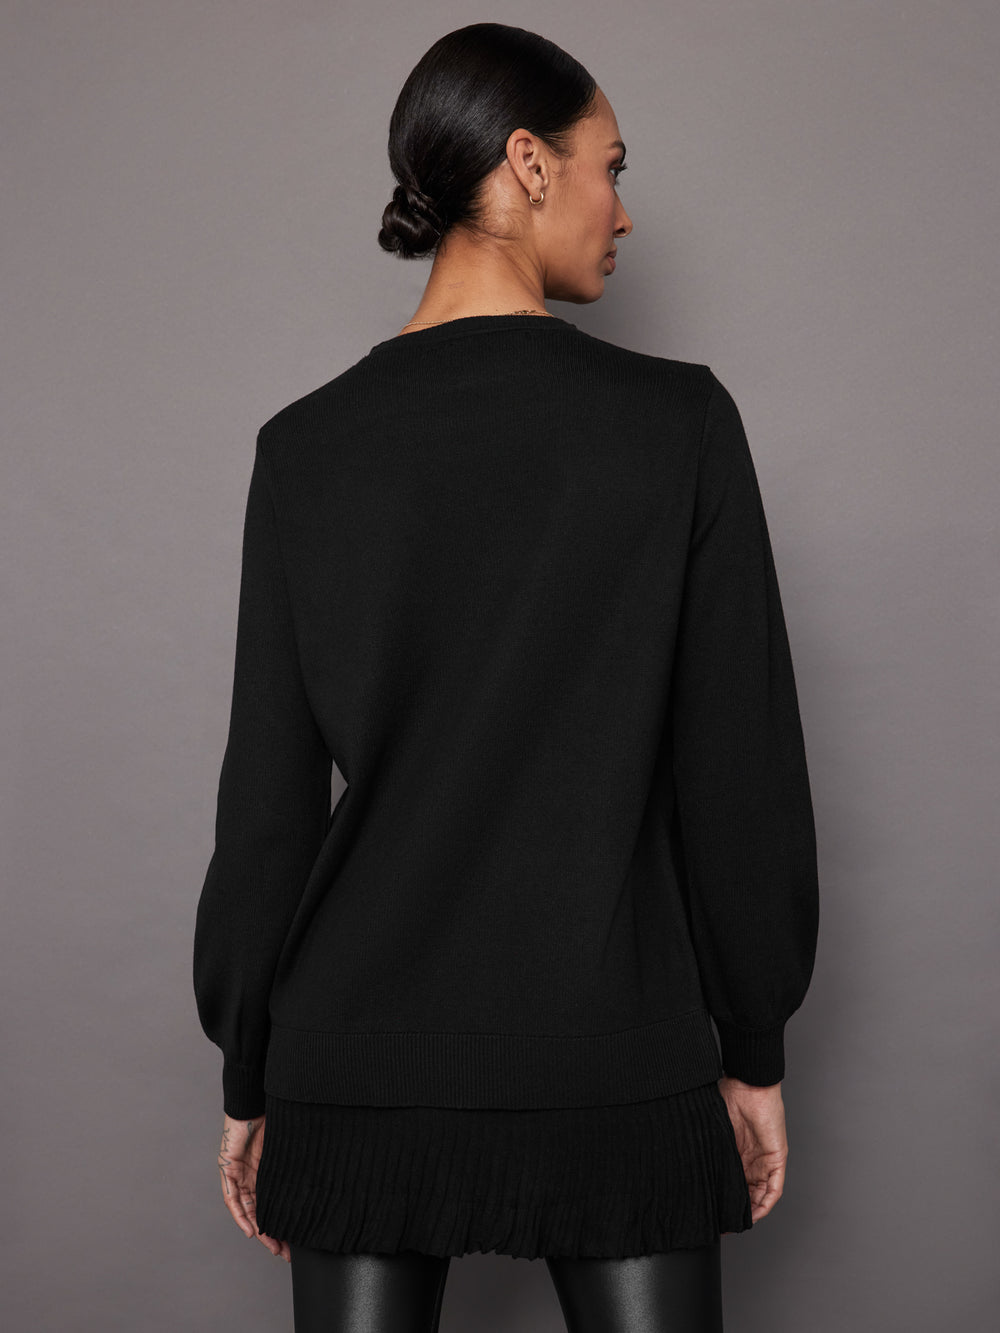 Pallas Pleated Sweatshirt Dress - Black